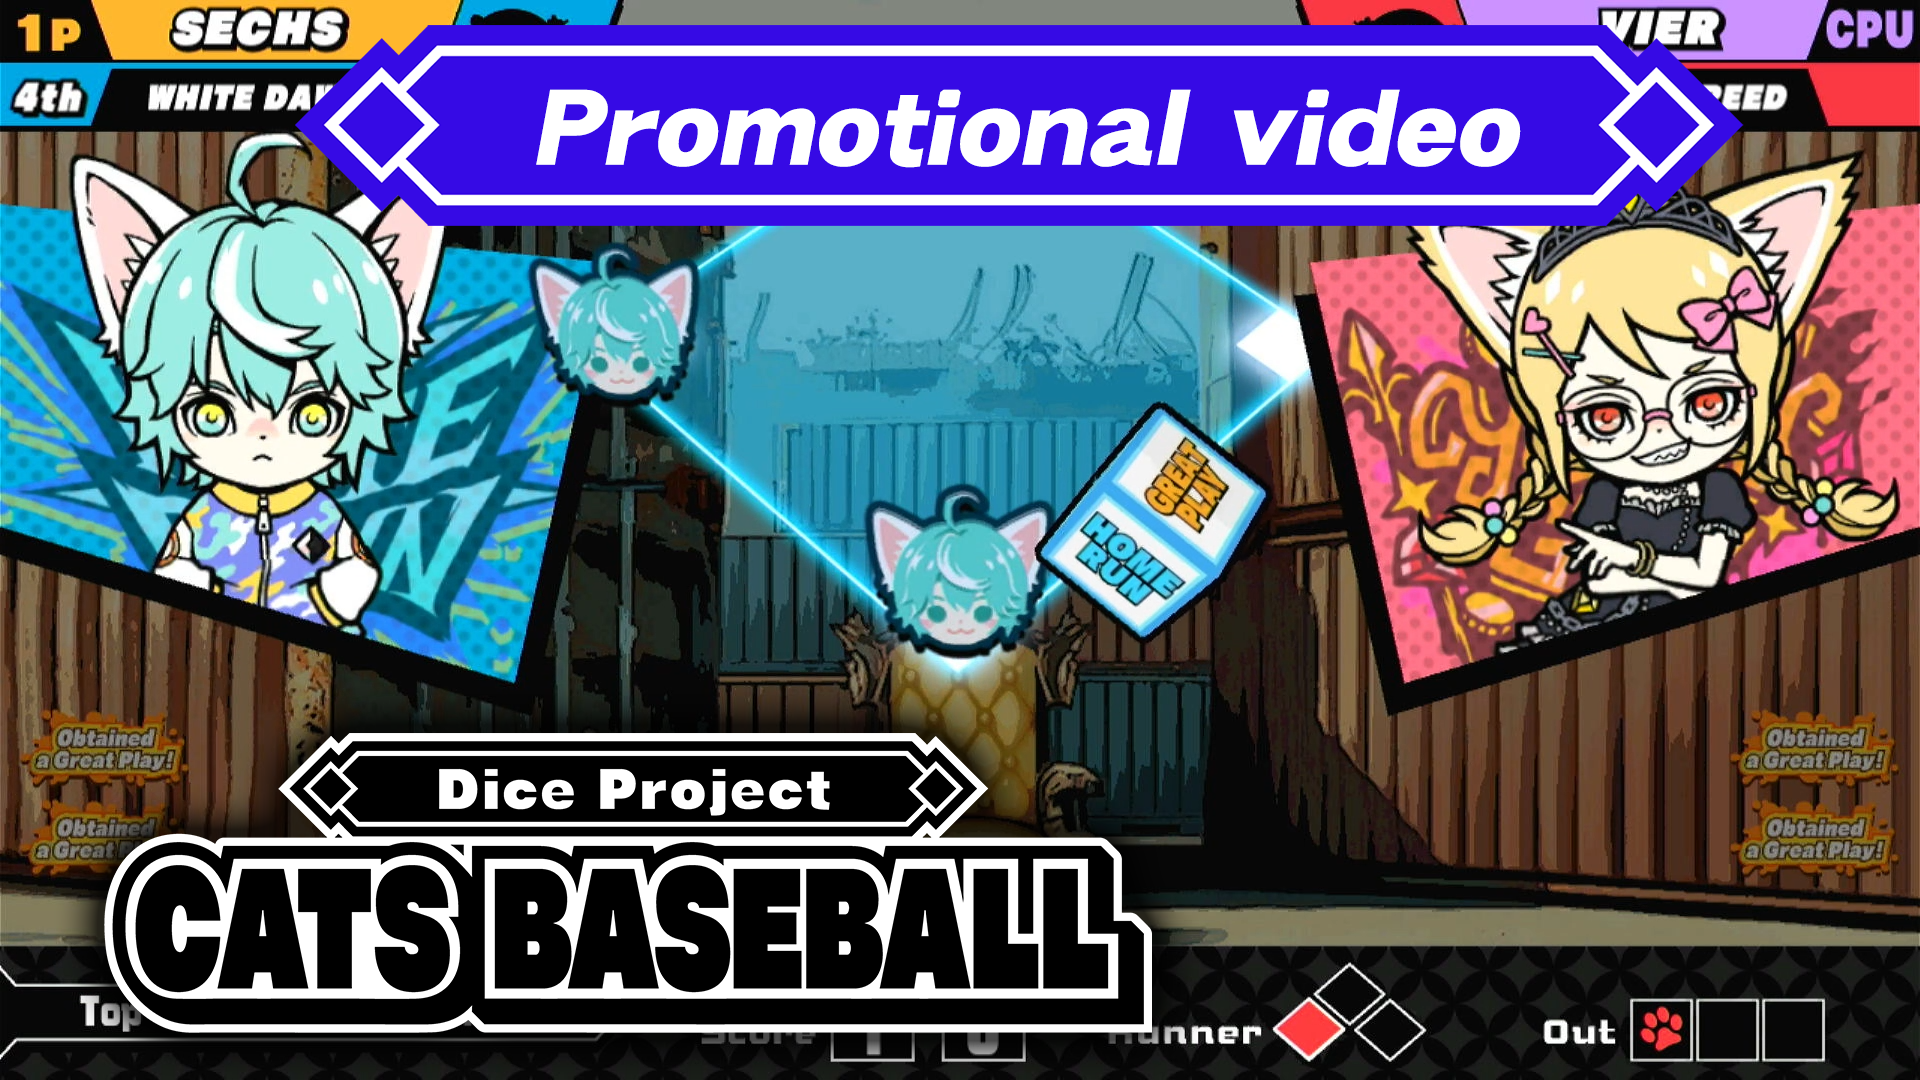 Promotional Video Dice Project CATSBASEBALL